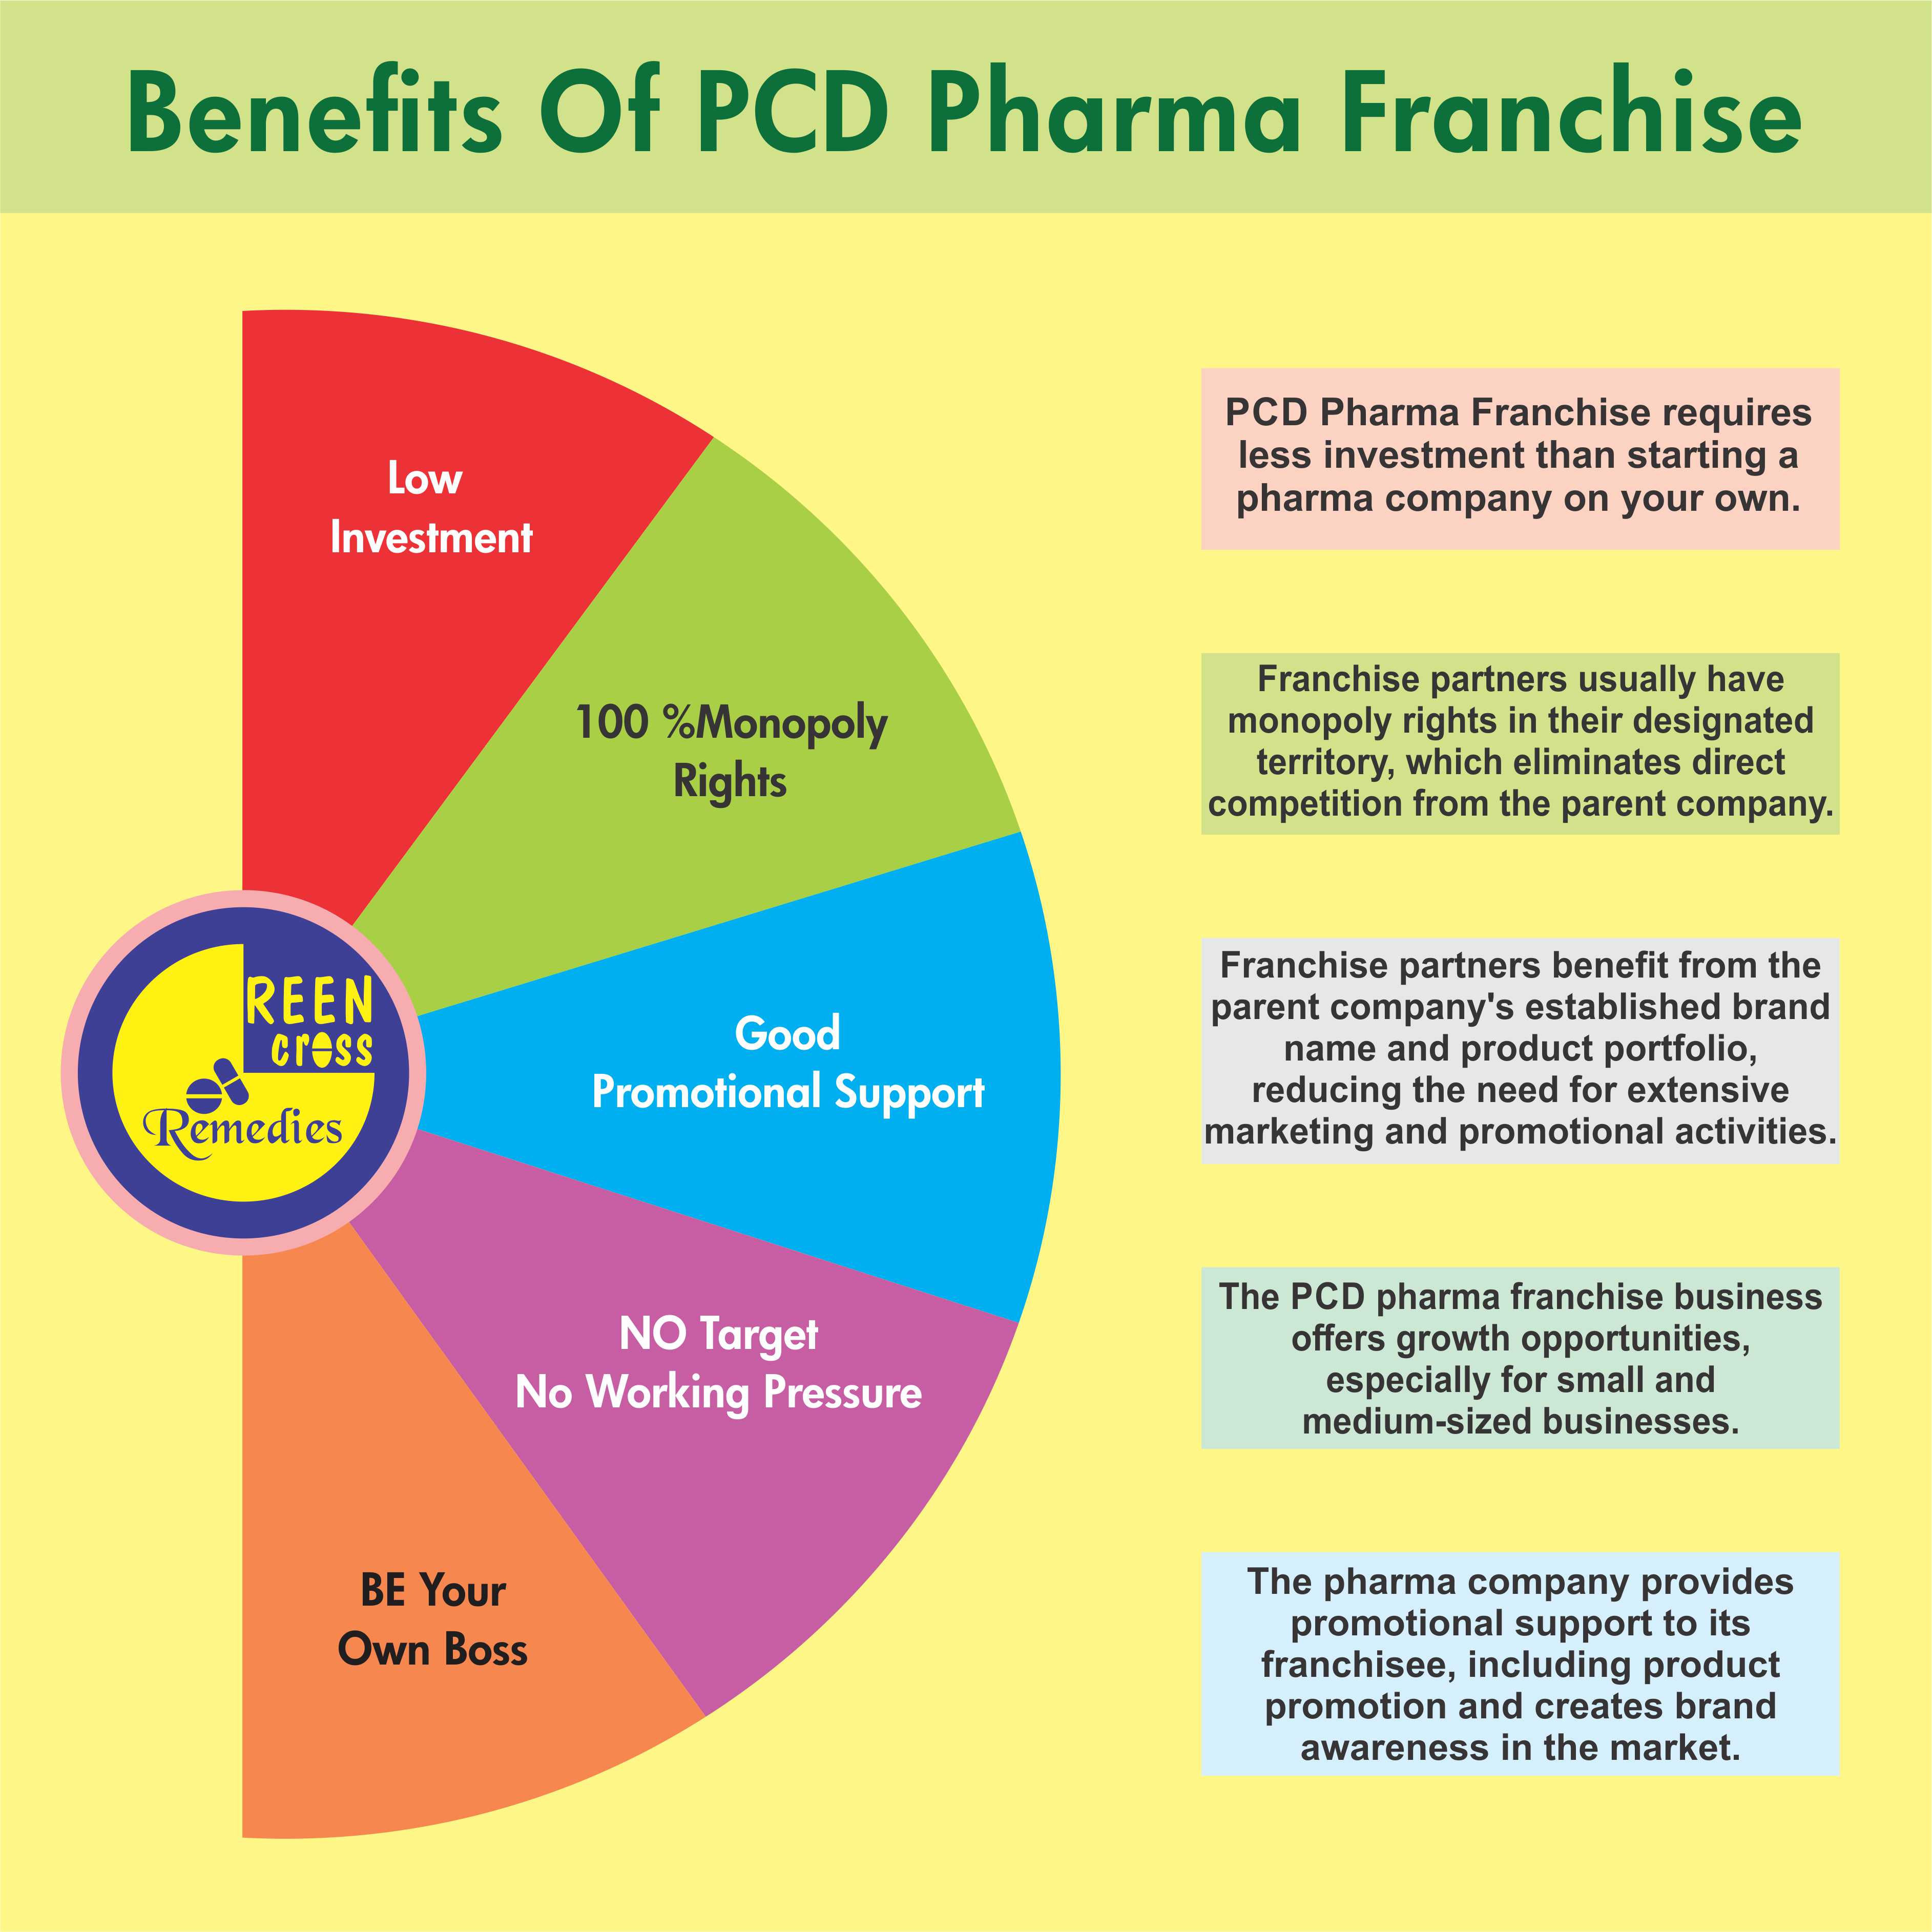 Benefits Of PCD Pharma Franchise